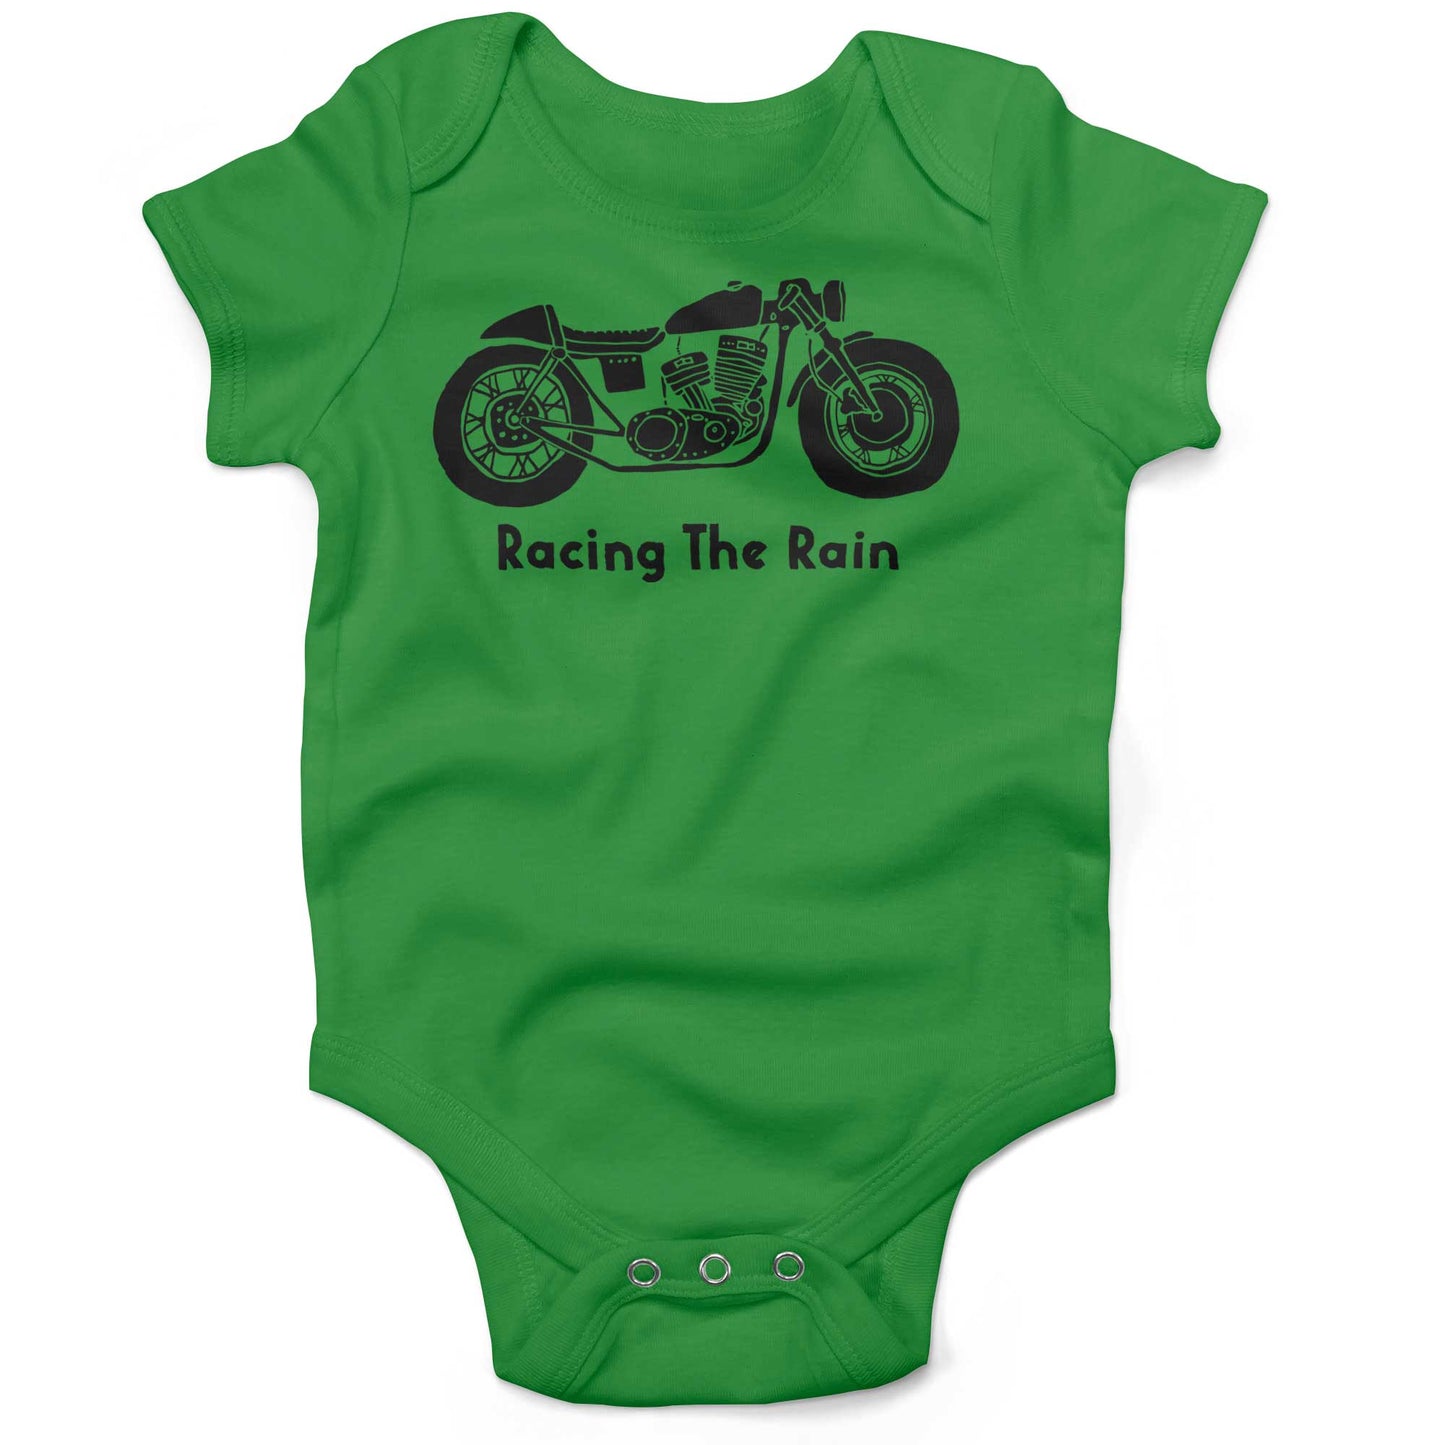 Racing The Rain Infant Bodysuit-Grass Green-3-6 months